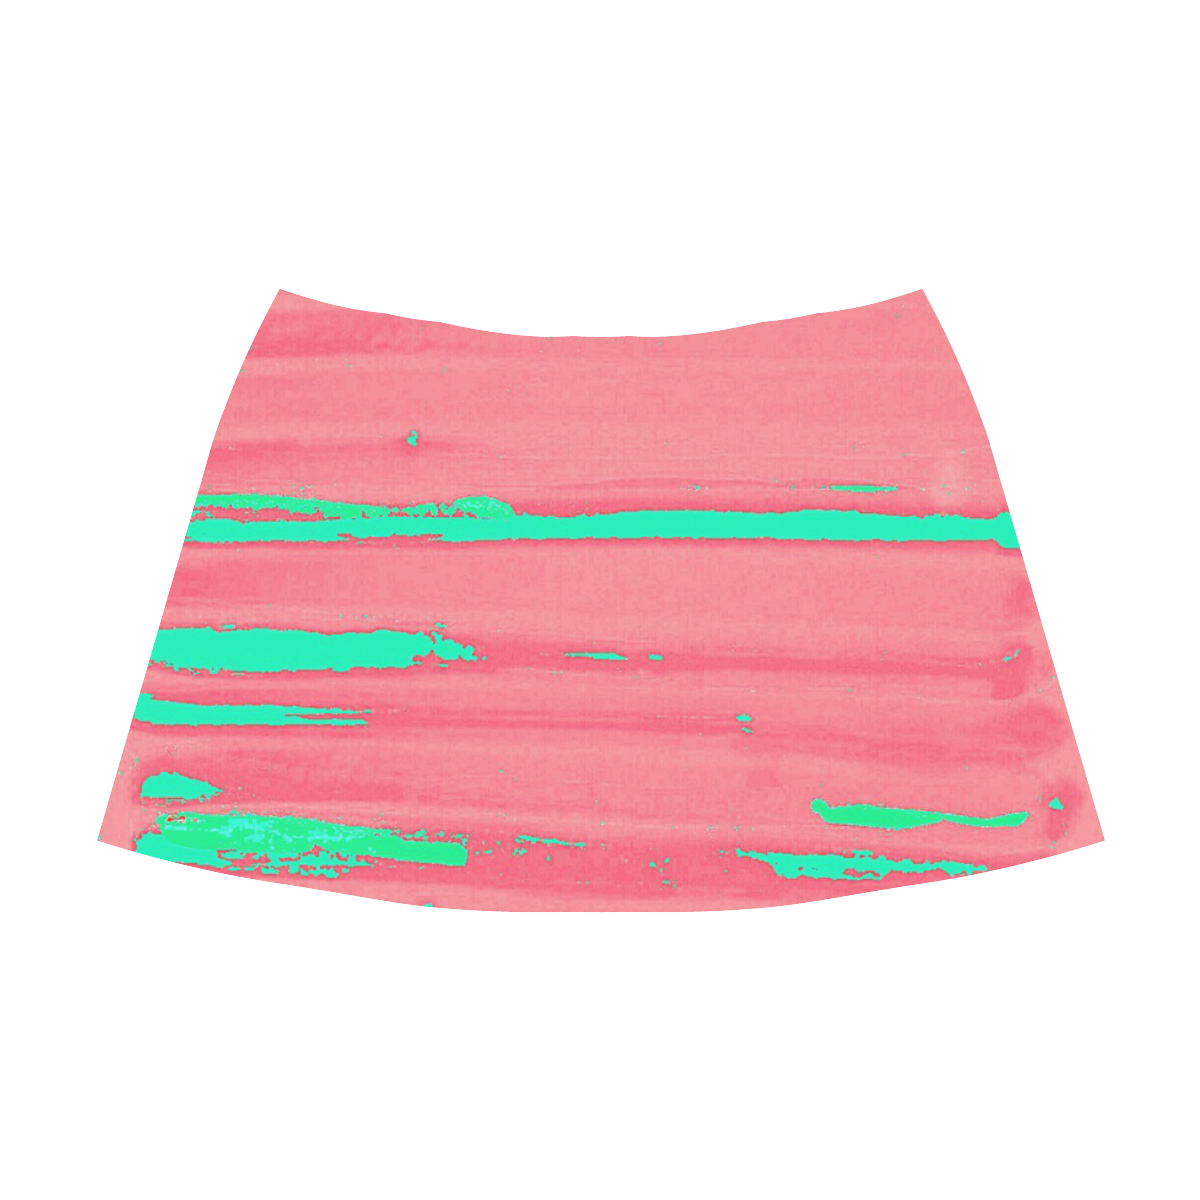 Mint on Pink Mnemosyne Women's Crepe Skirt (Model D16)